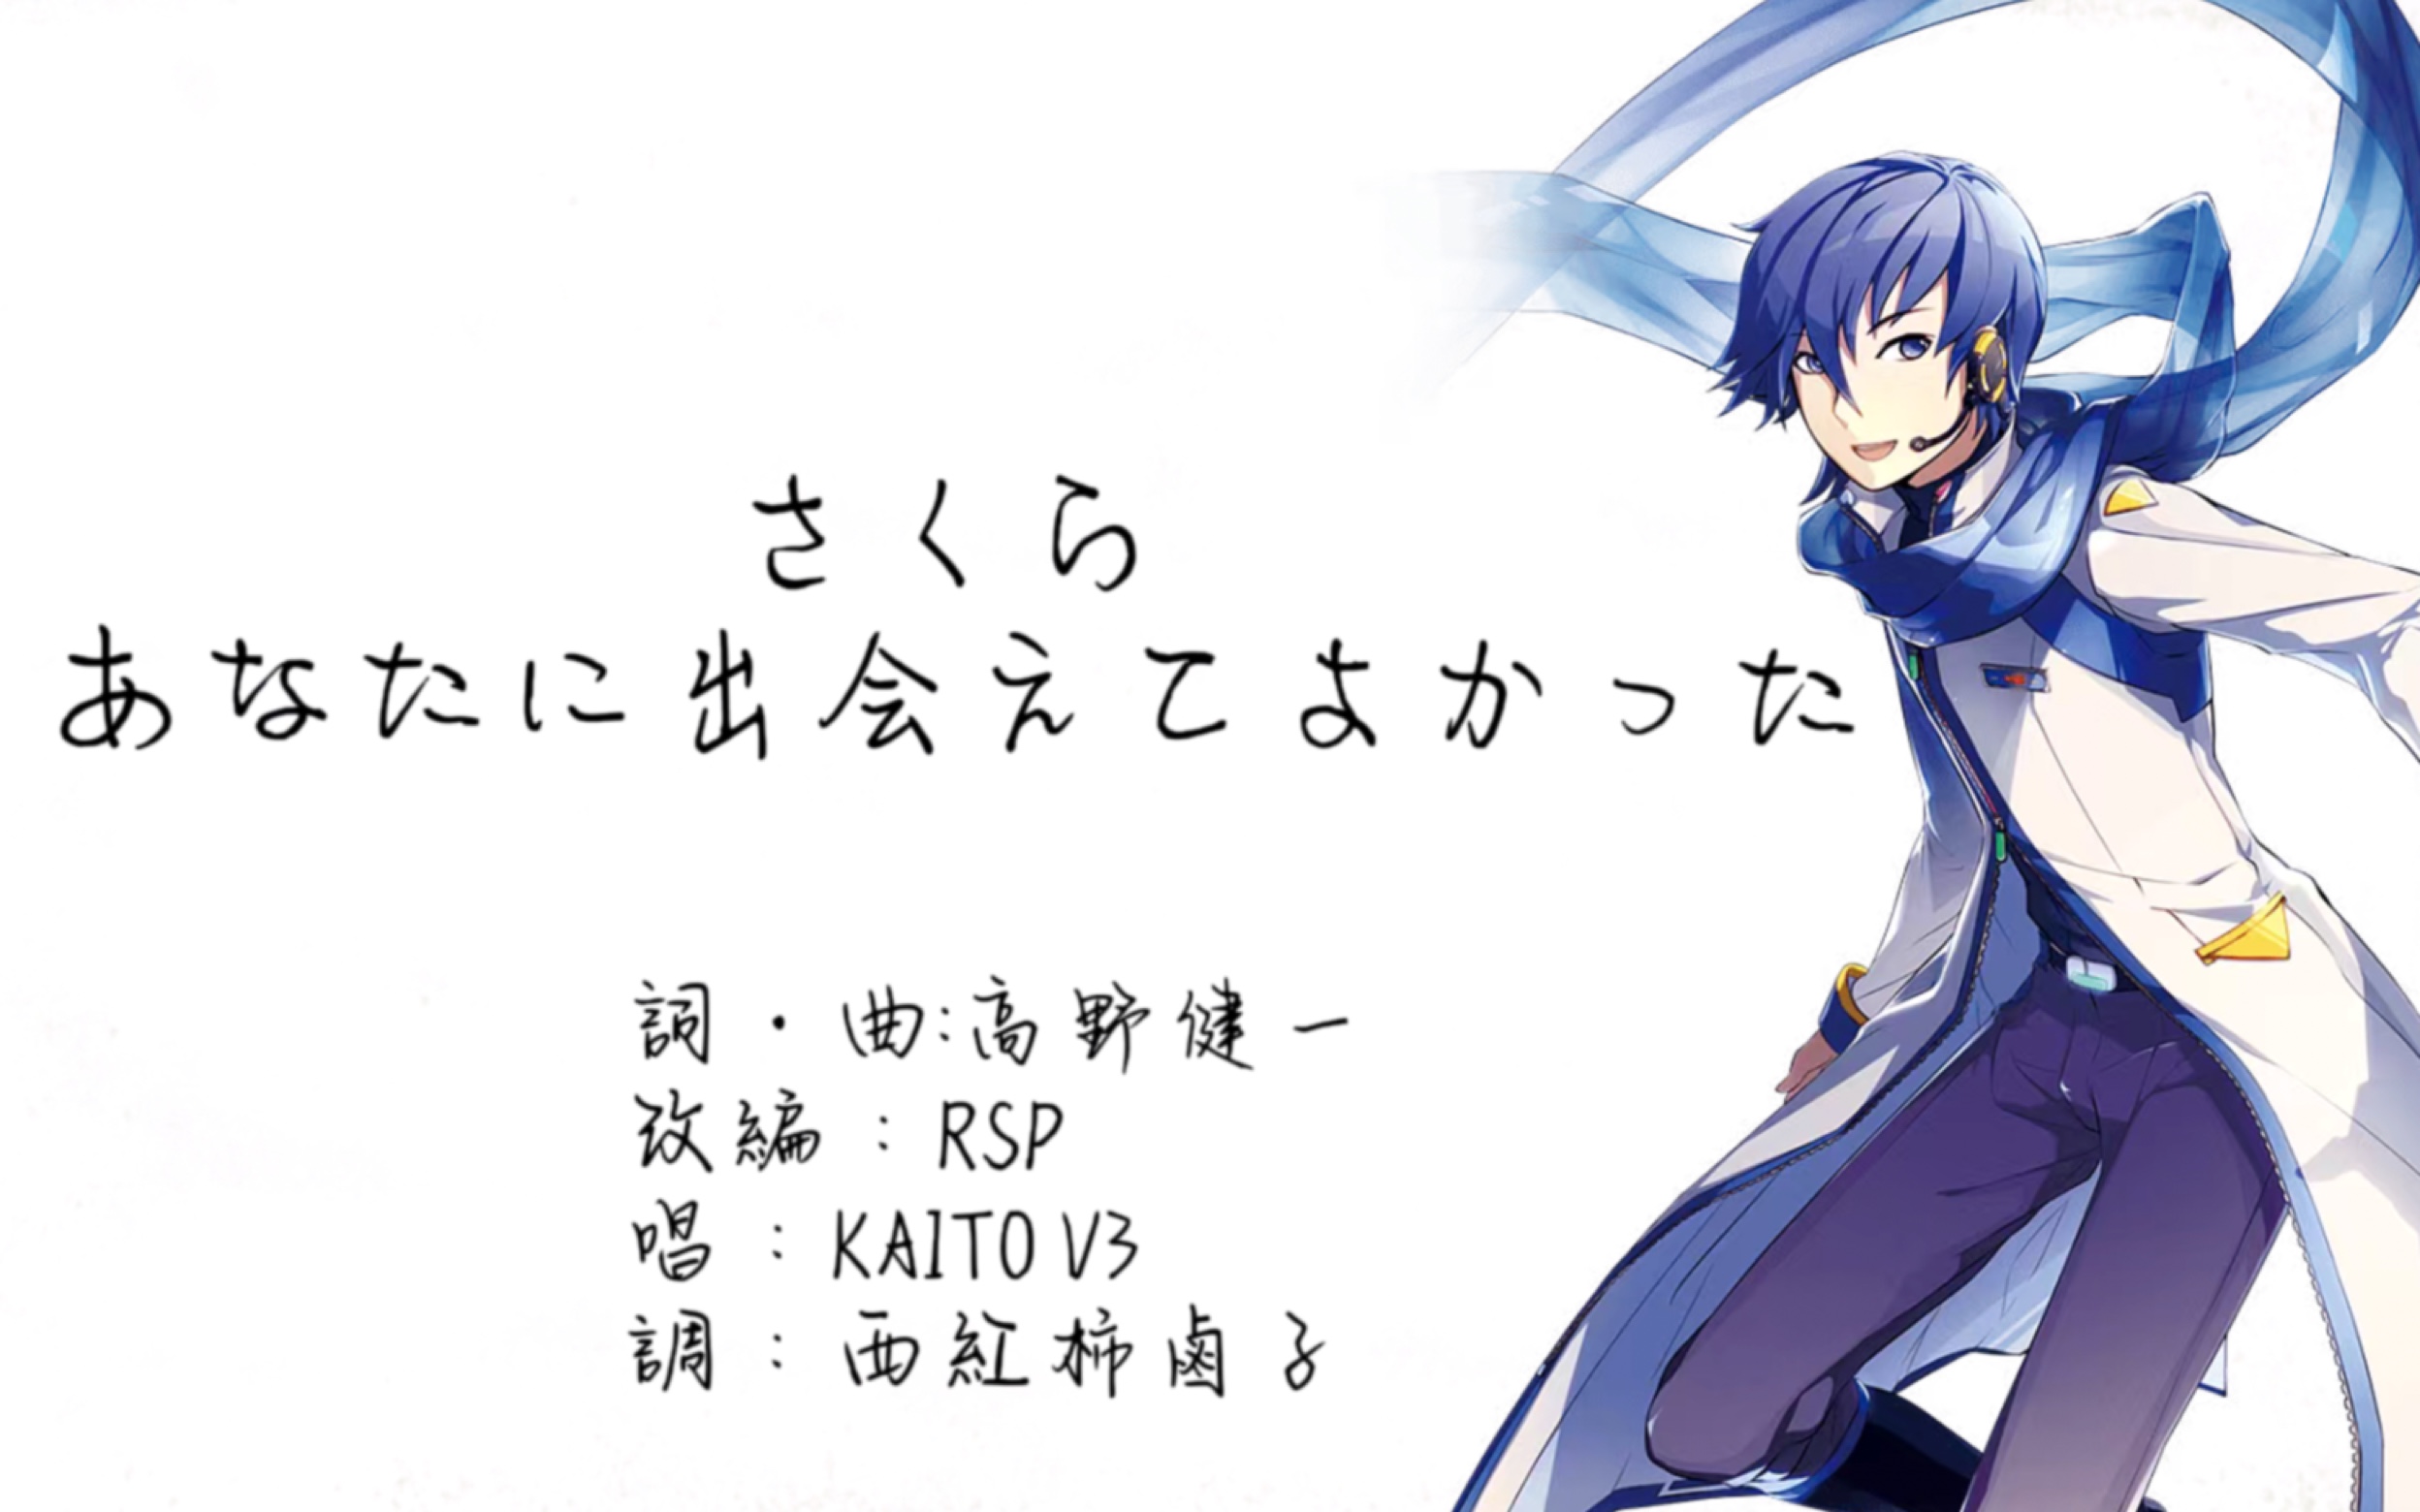 【KAITO V3】樱花樱花想见你-さくら 〜あなたに出会えてよかった〜【vocaloid cover】